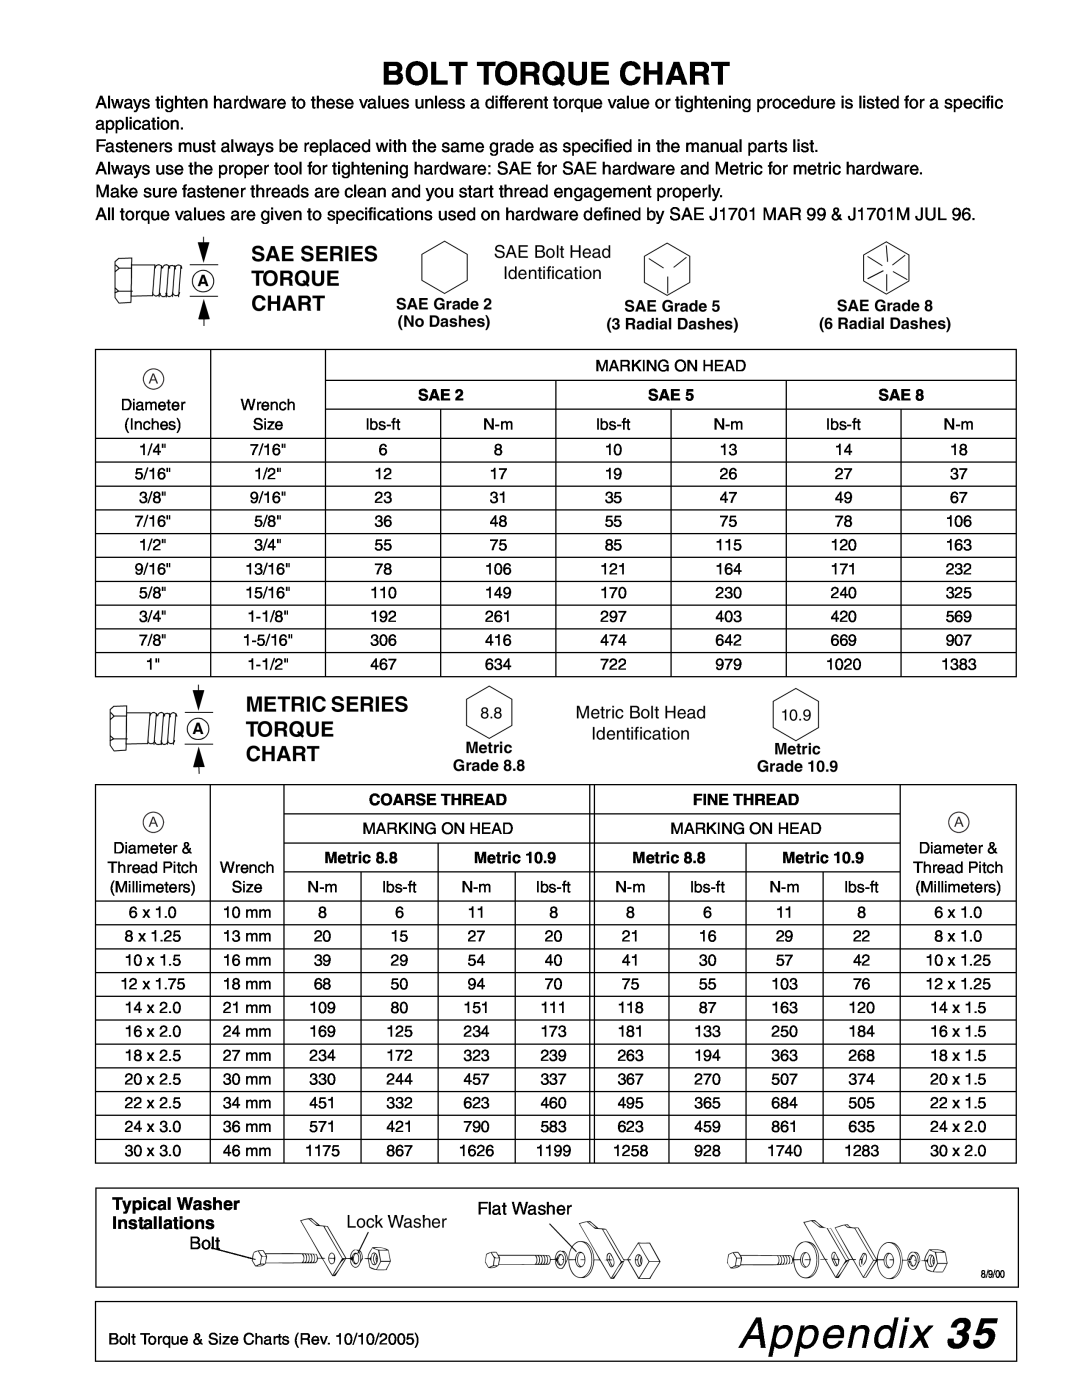 Woods Equipment L306 K50 manual Appendix, Bolt Torque Chart, Sae Series A Torque Chart, Metric Series 